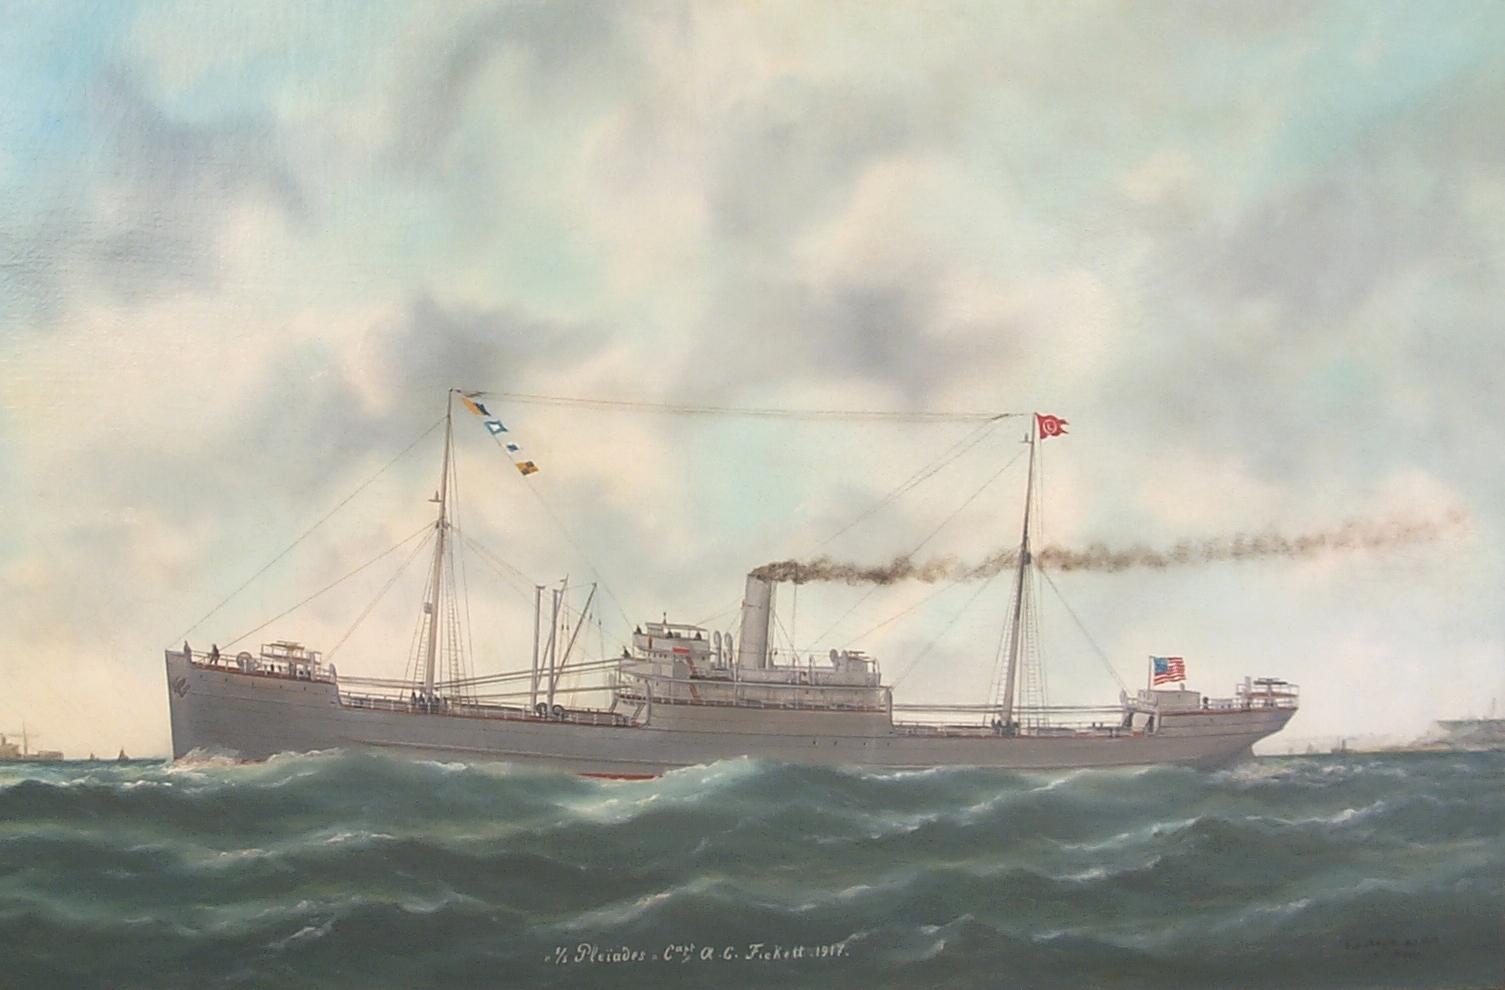 American Merchant Ship S.S. PLEIADES, Later WWI US Navy Ship USS PLEIADES - Painting by Edouard Adam Jr.